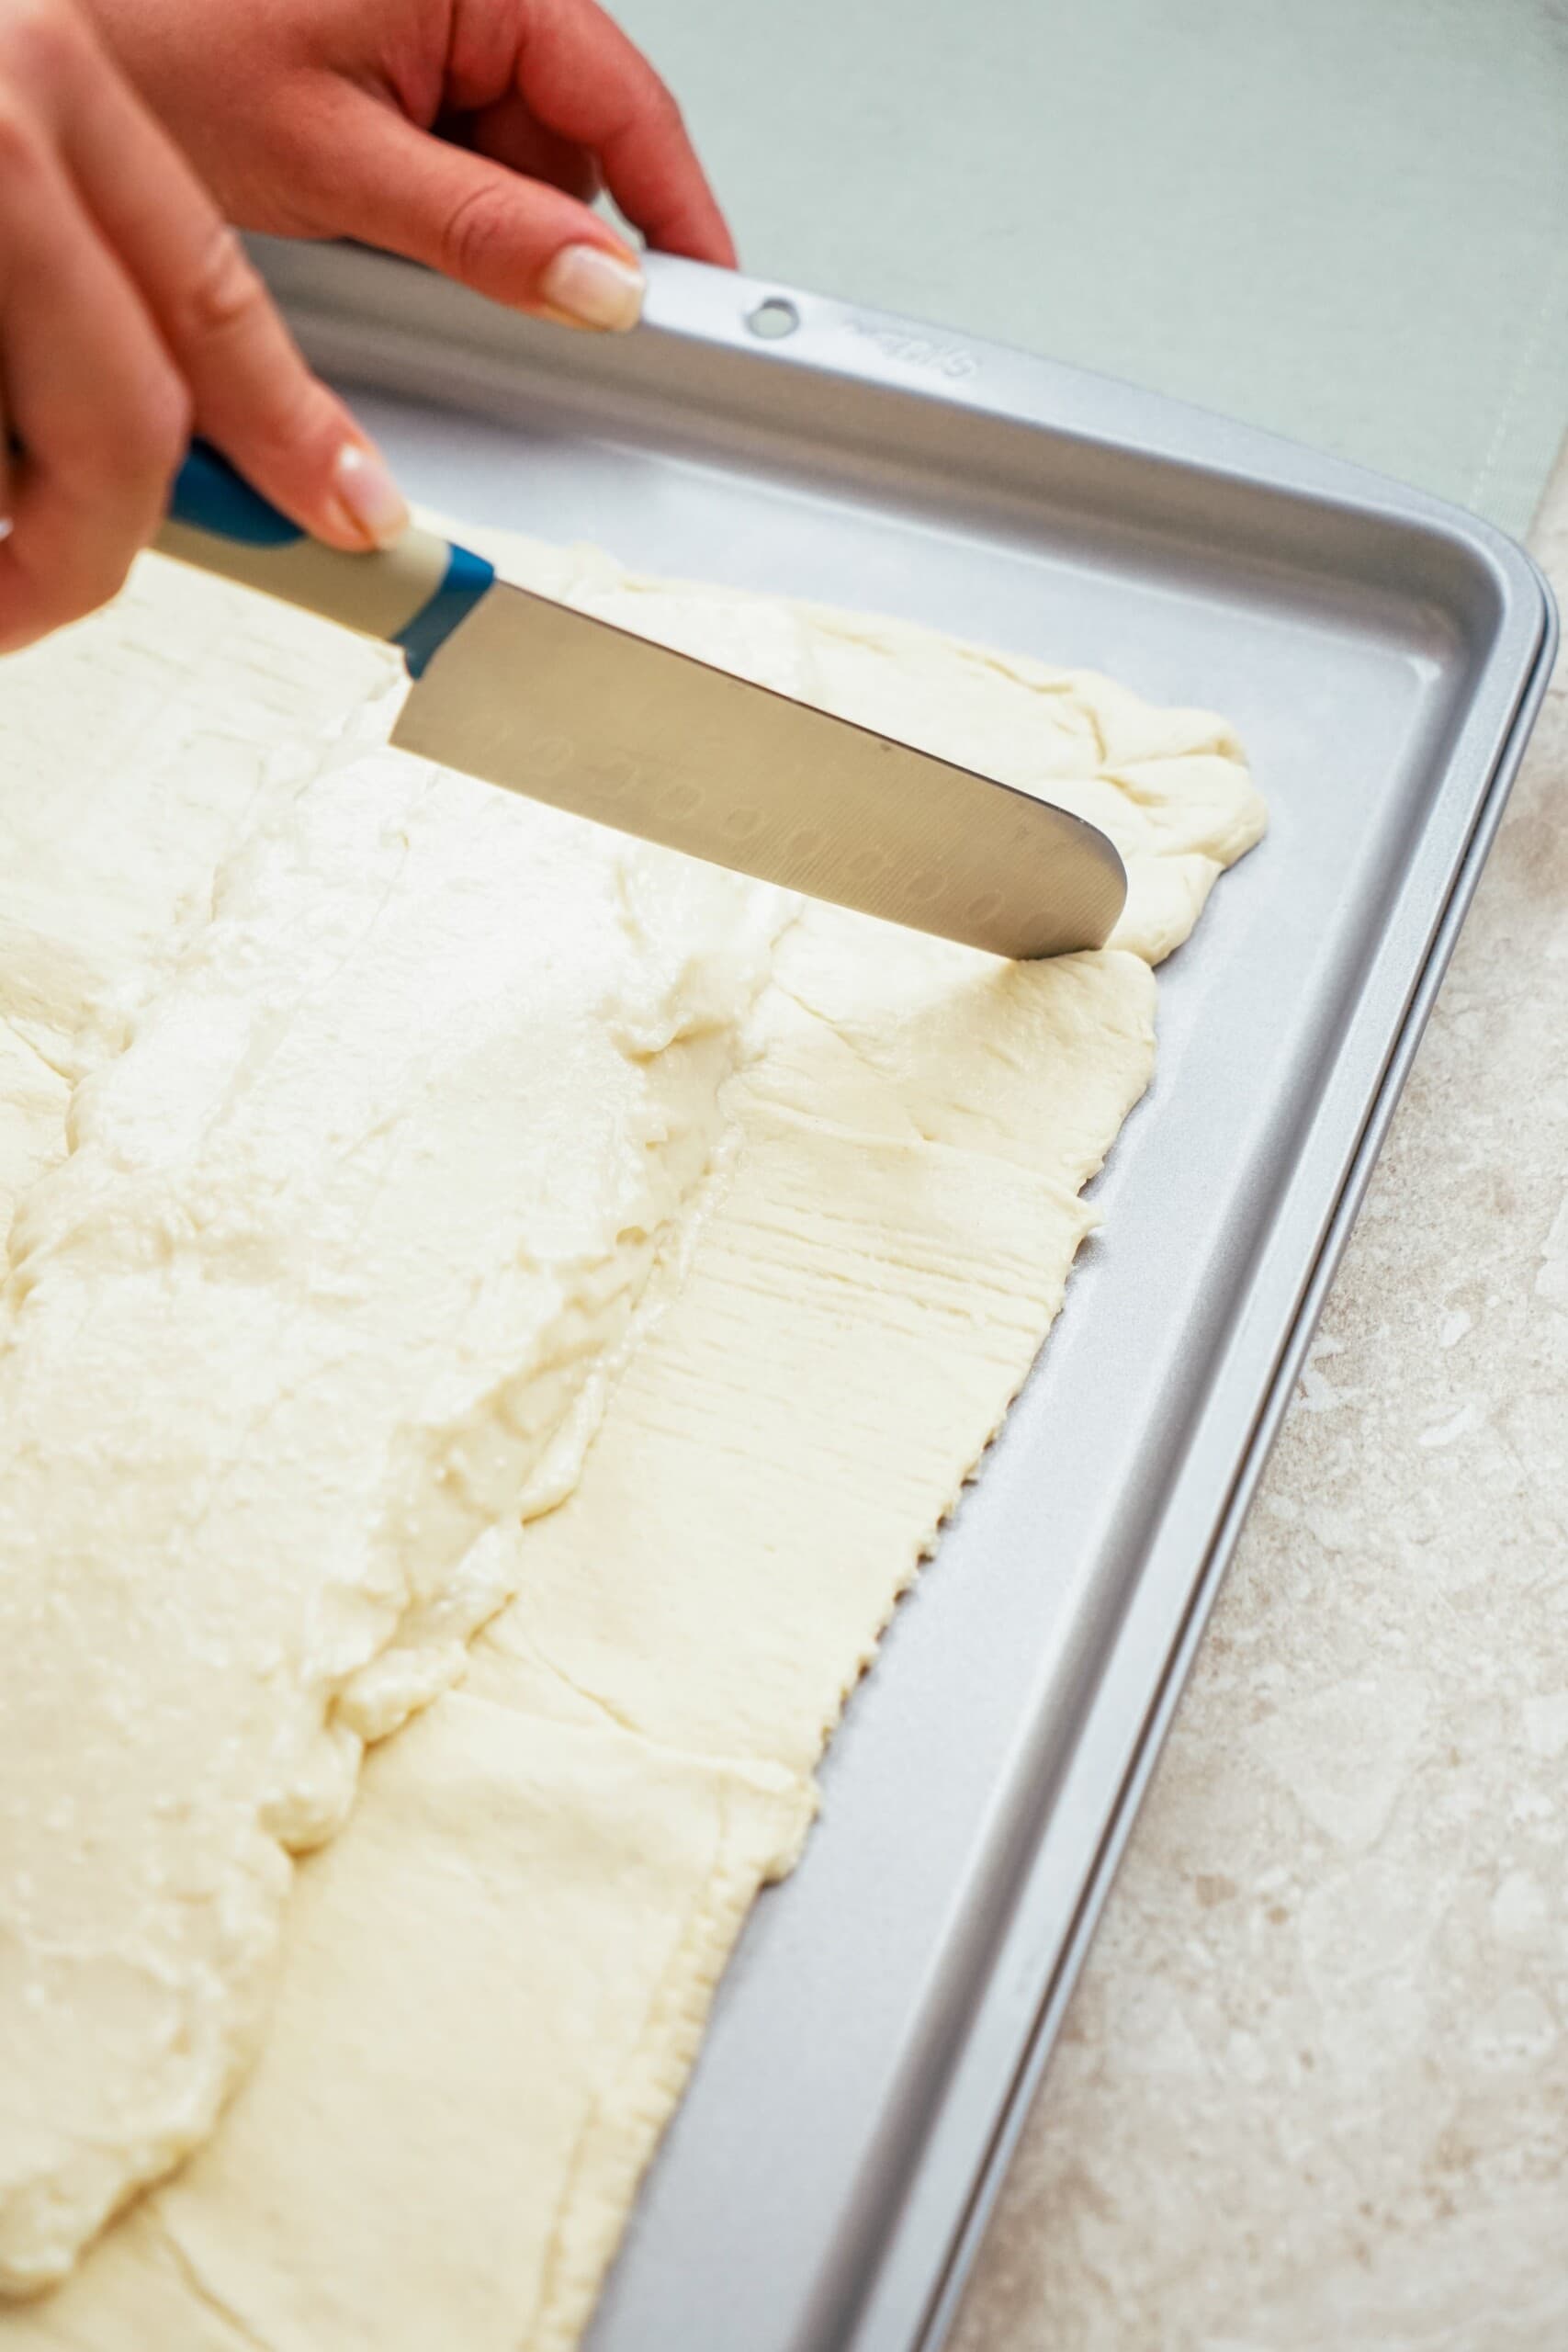 knife cutting diagonal cuts into the crescent dough